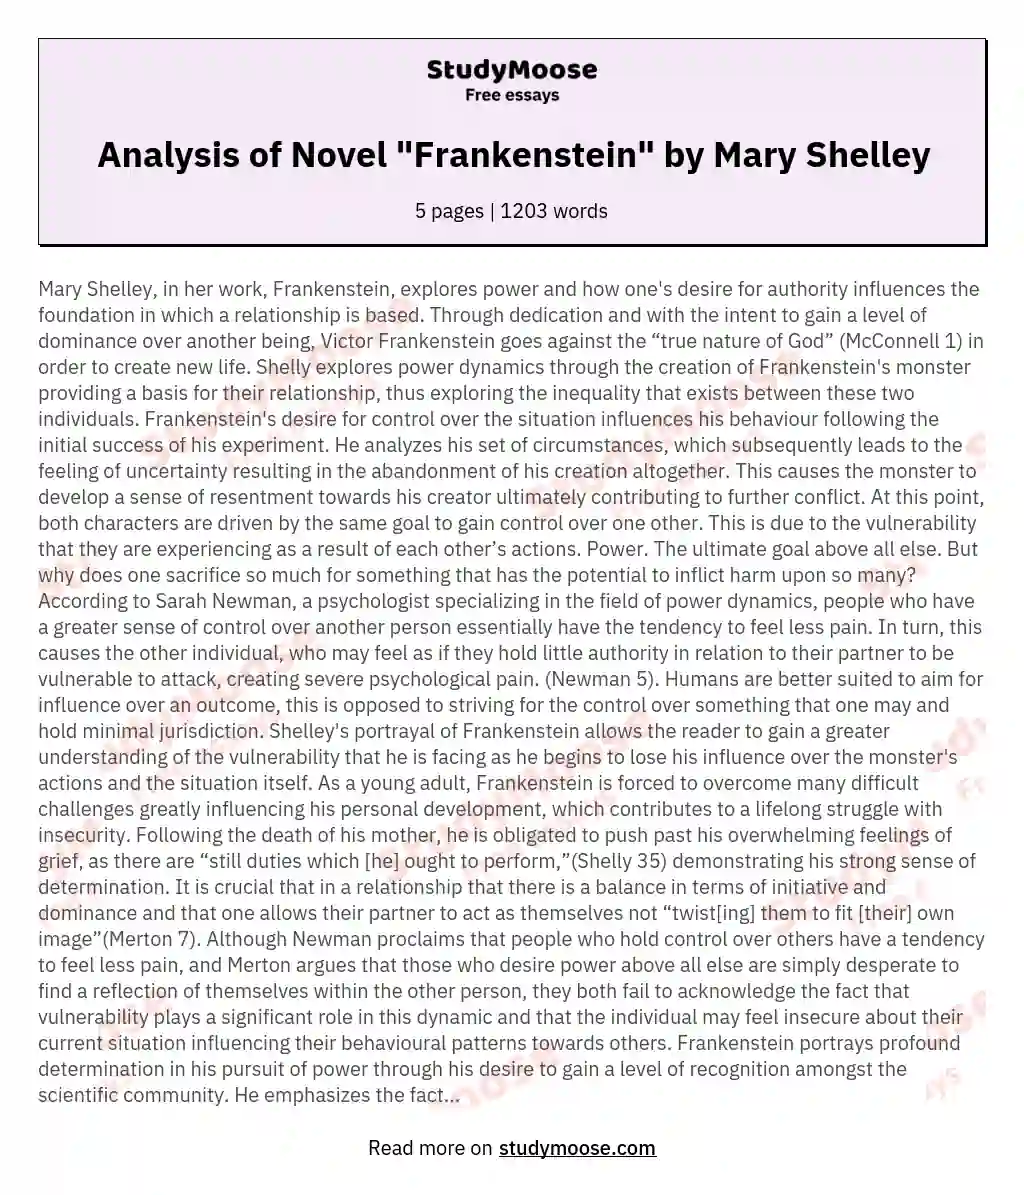 Analysis of Novel "Frankenstein" by Mary Shelley